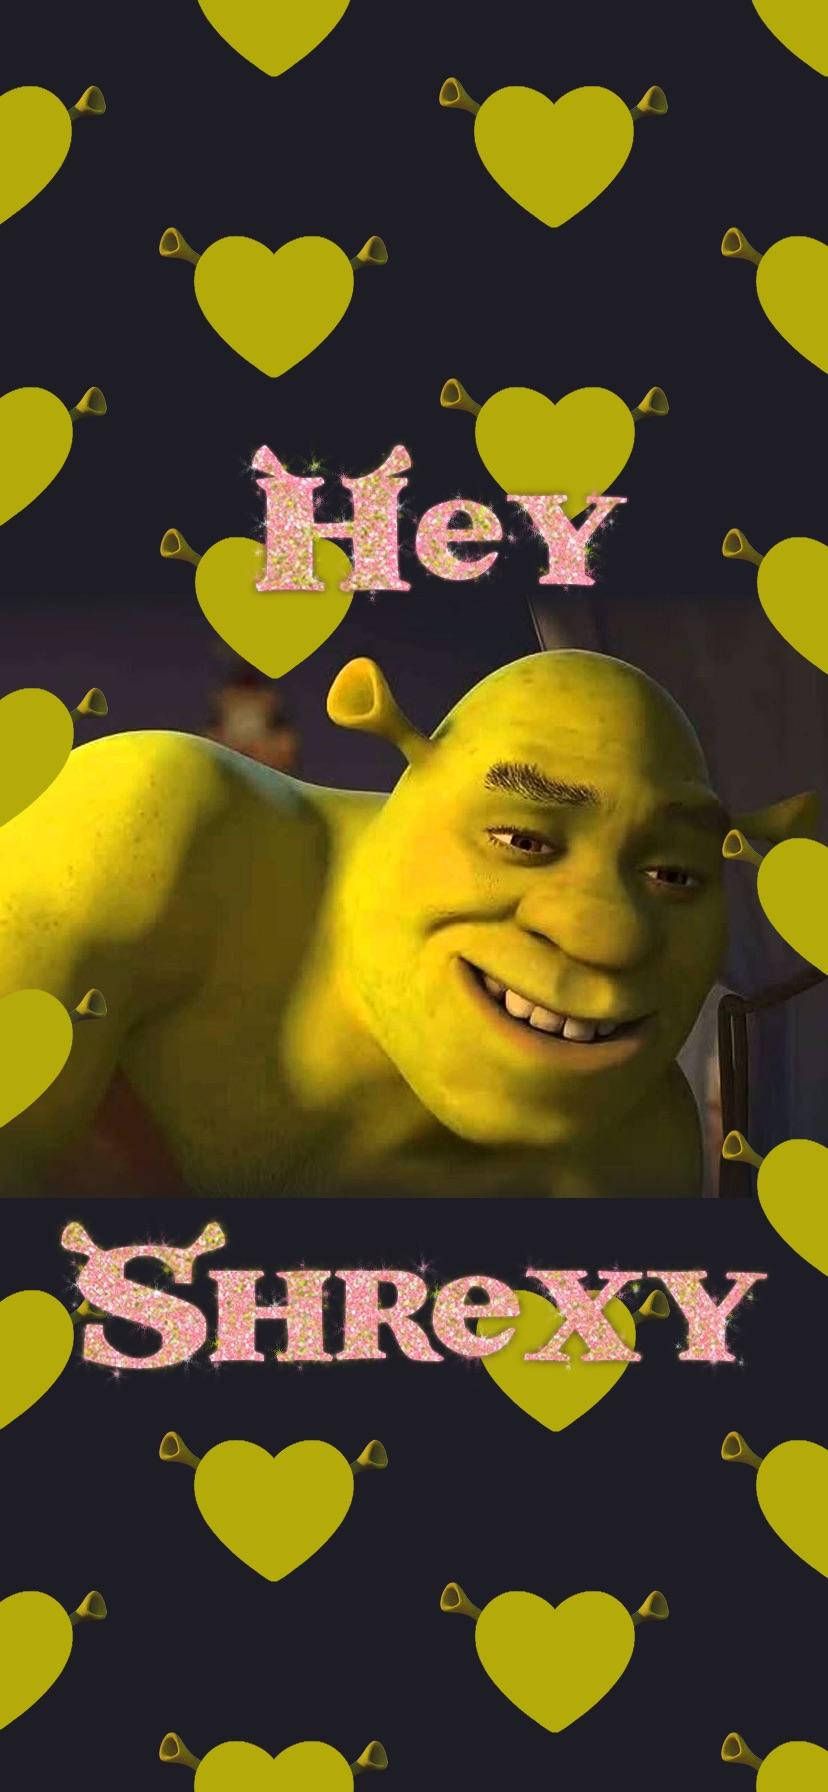 Download Shrek Hey Shrexy Wallpaper